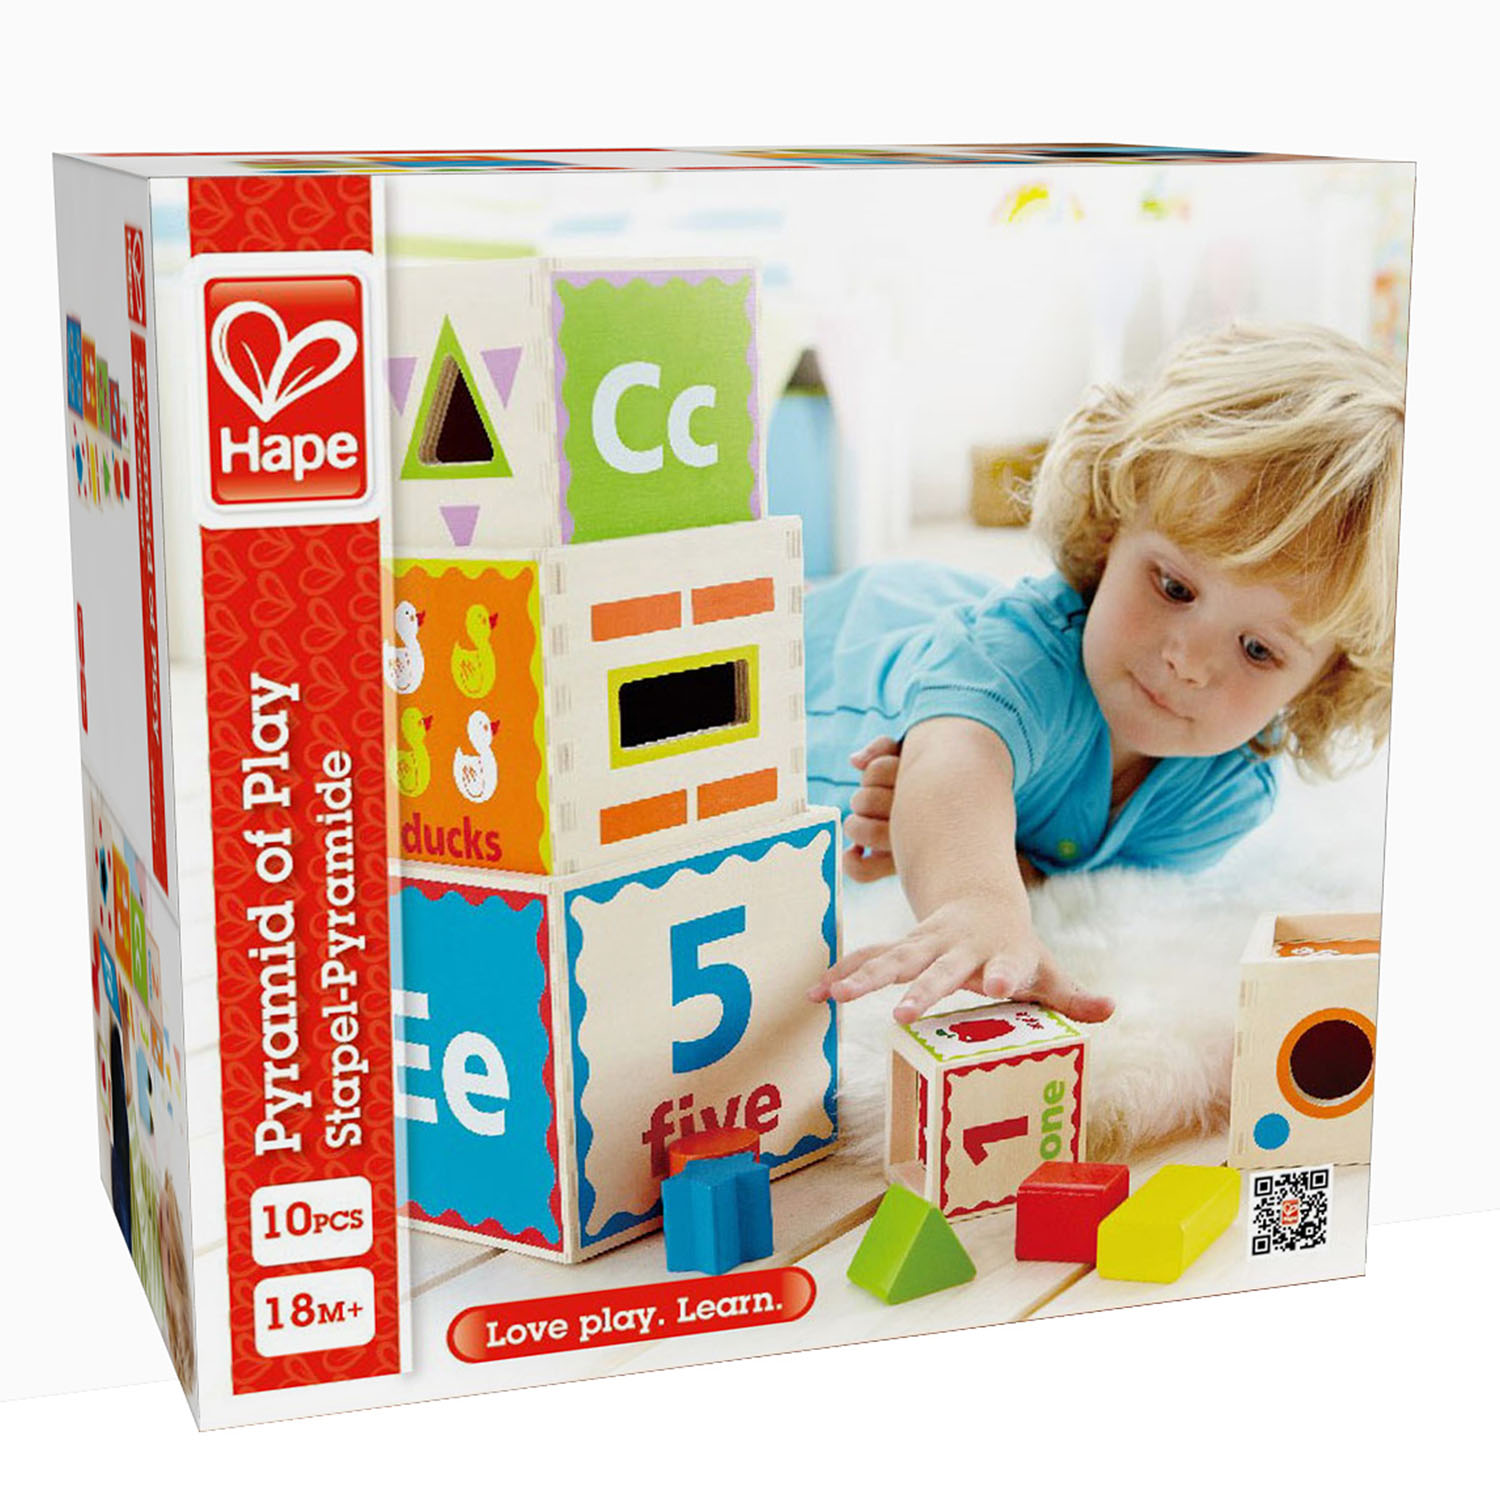 Hape Pyramid of Play Wooden Toddler Wooden Nesting Blocks Set 